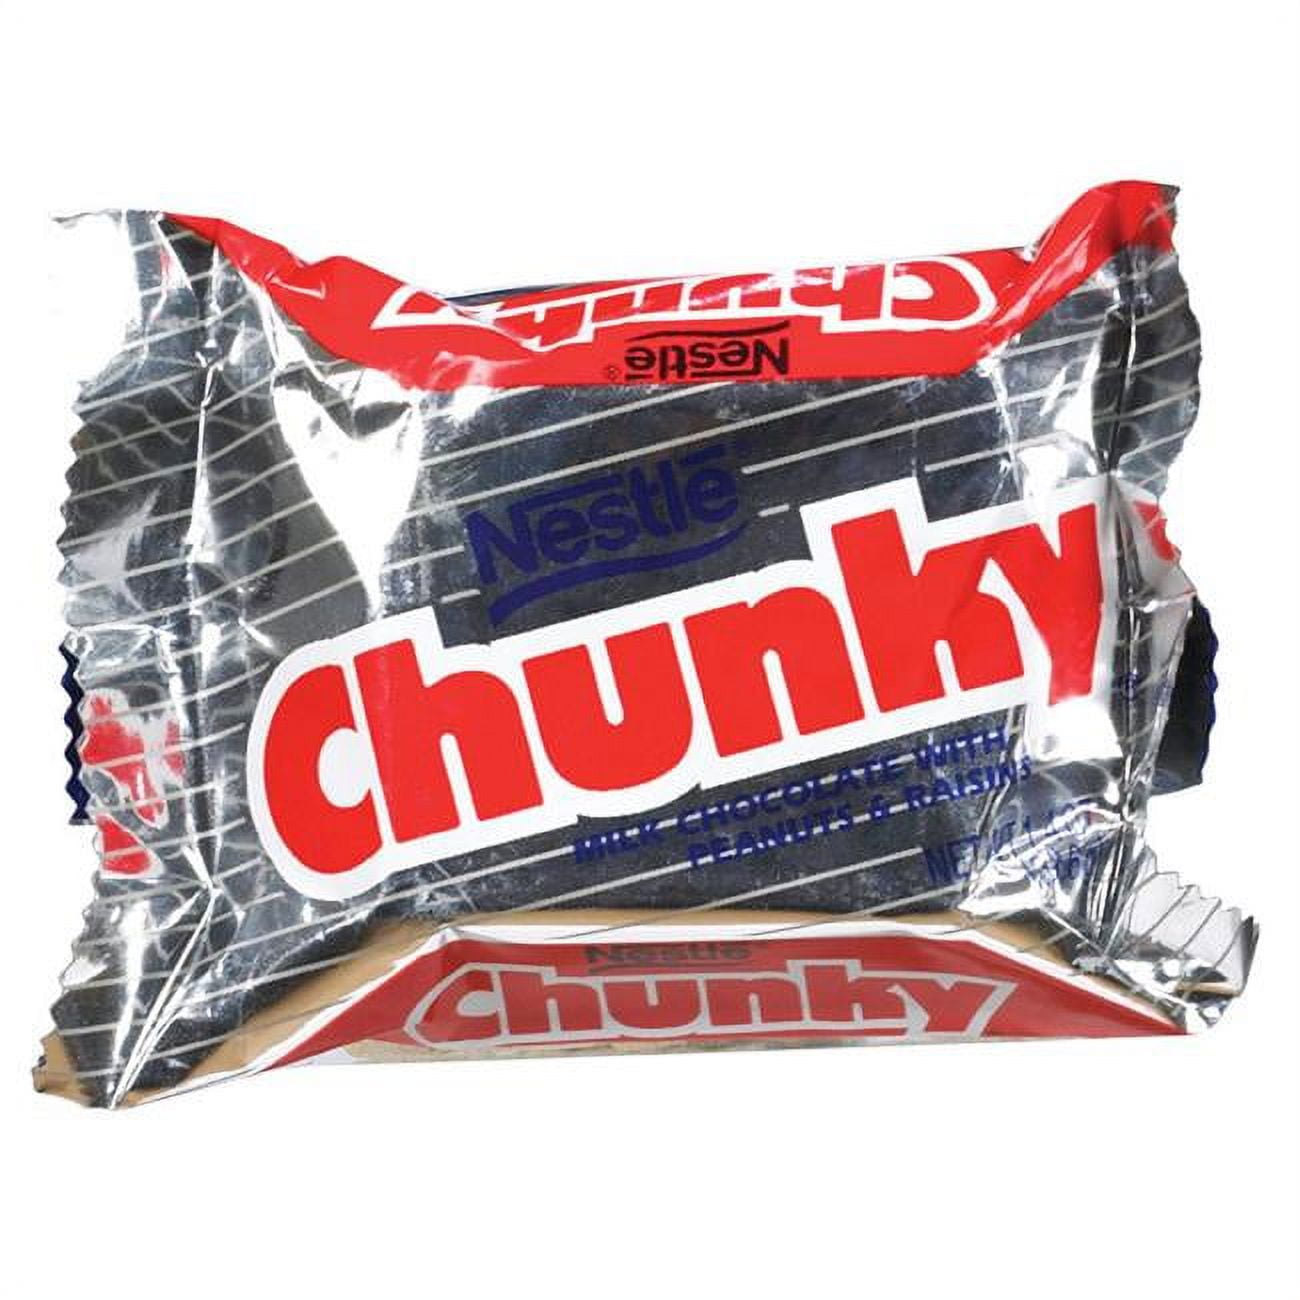 UPC 099900346639 product image for 93592 1.4 oz Chunky Peanut, Chocolate, Raisins Candy Bar - Pack of 24 | upcitemdb.com